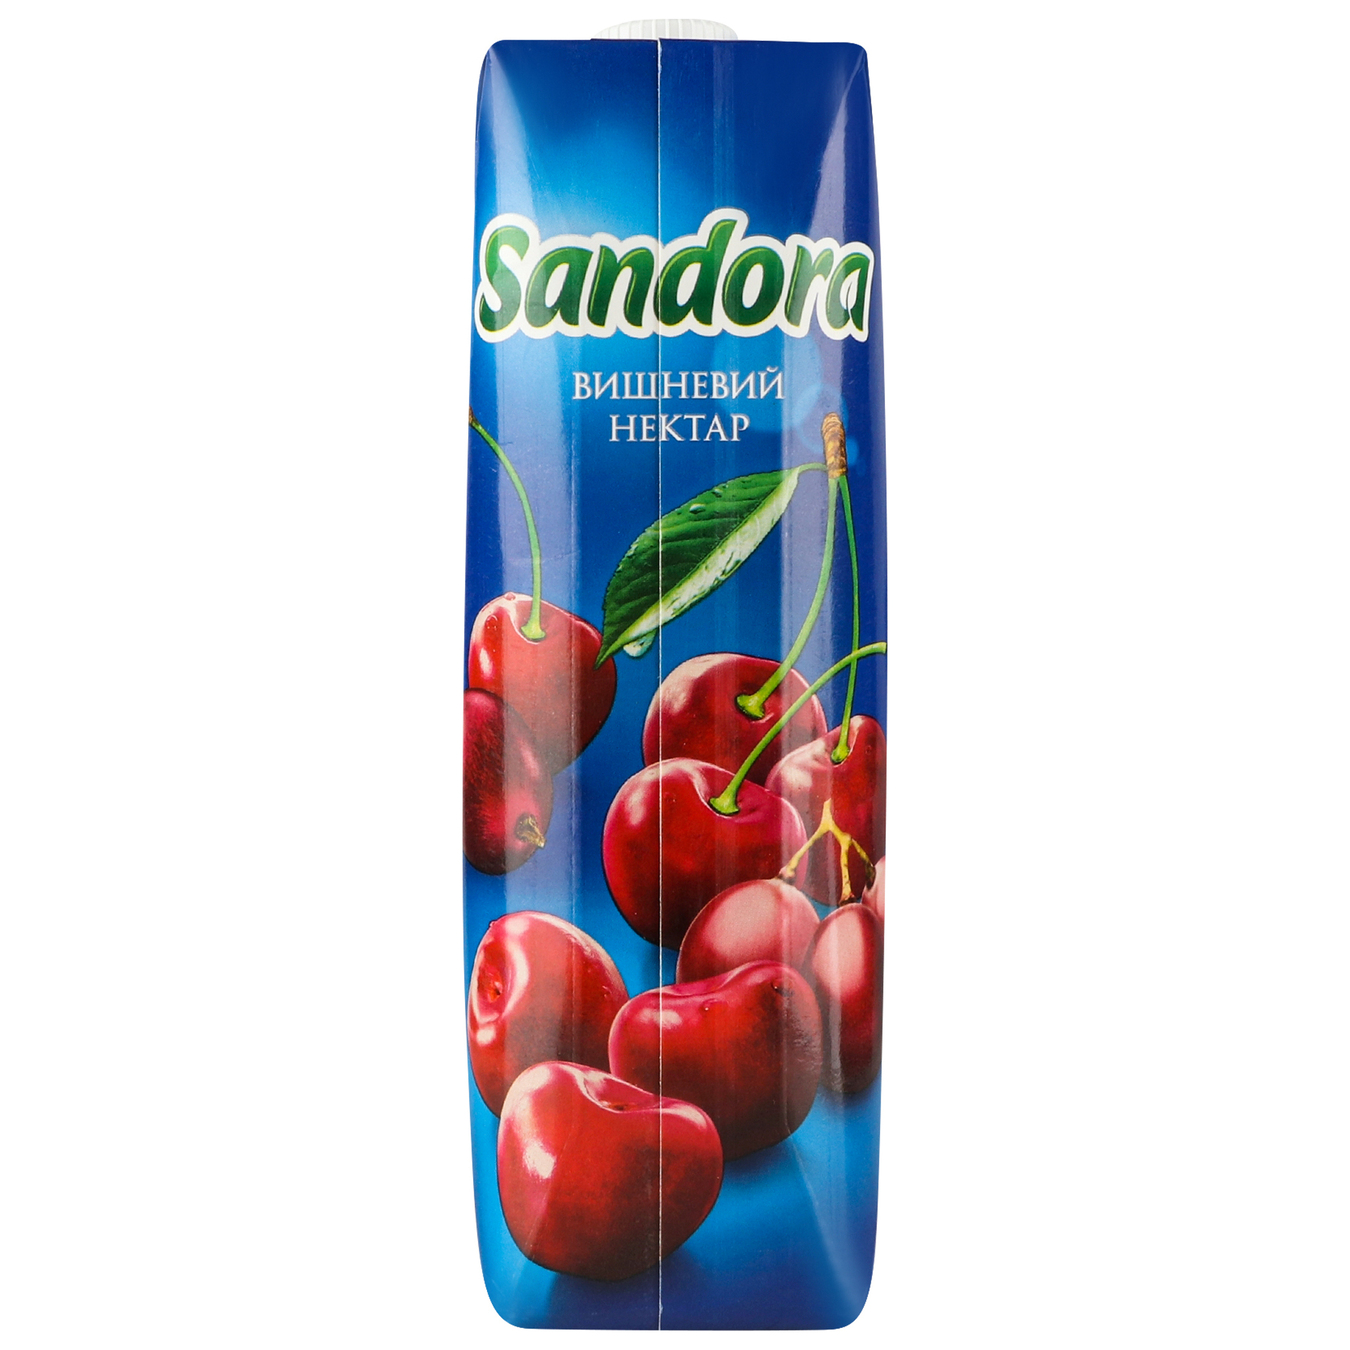 Sandora Cherry Nectar 0,95l 2